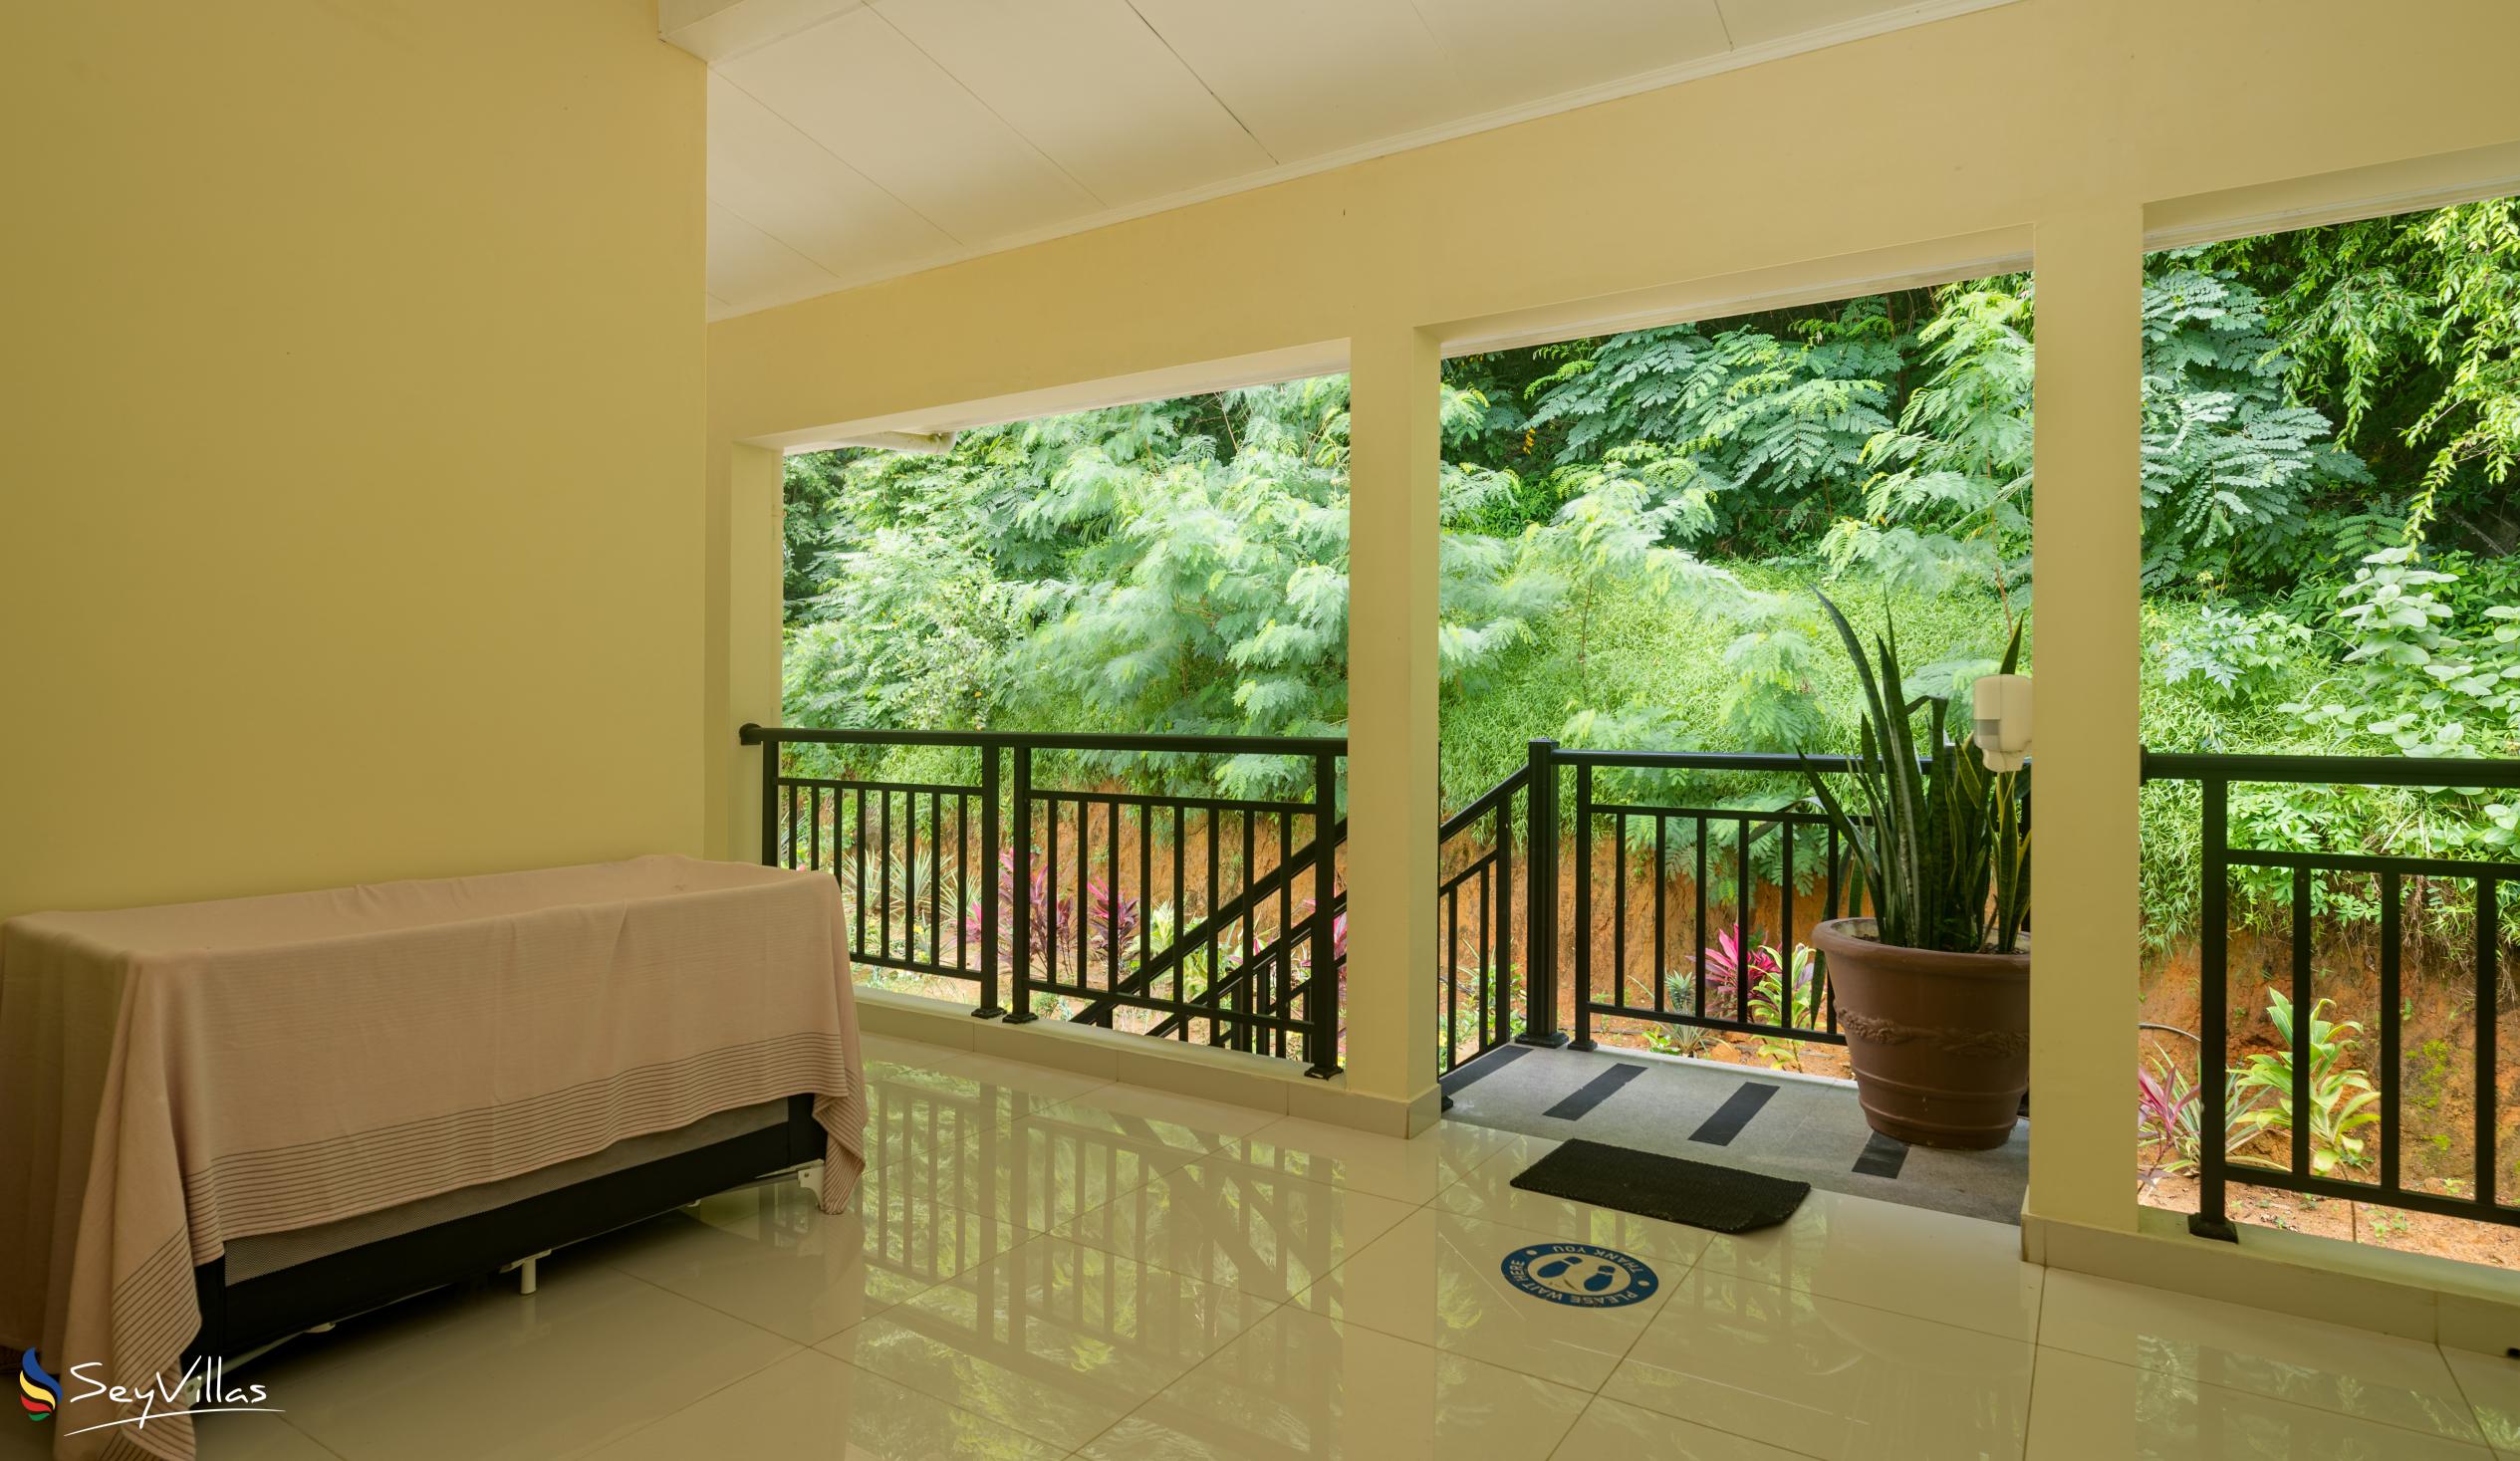 Photo 91: Kanasuk Self Catering Apartments - Indoor area - Mahé (Seychelles)